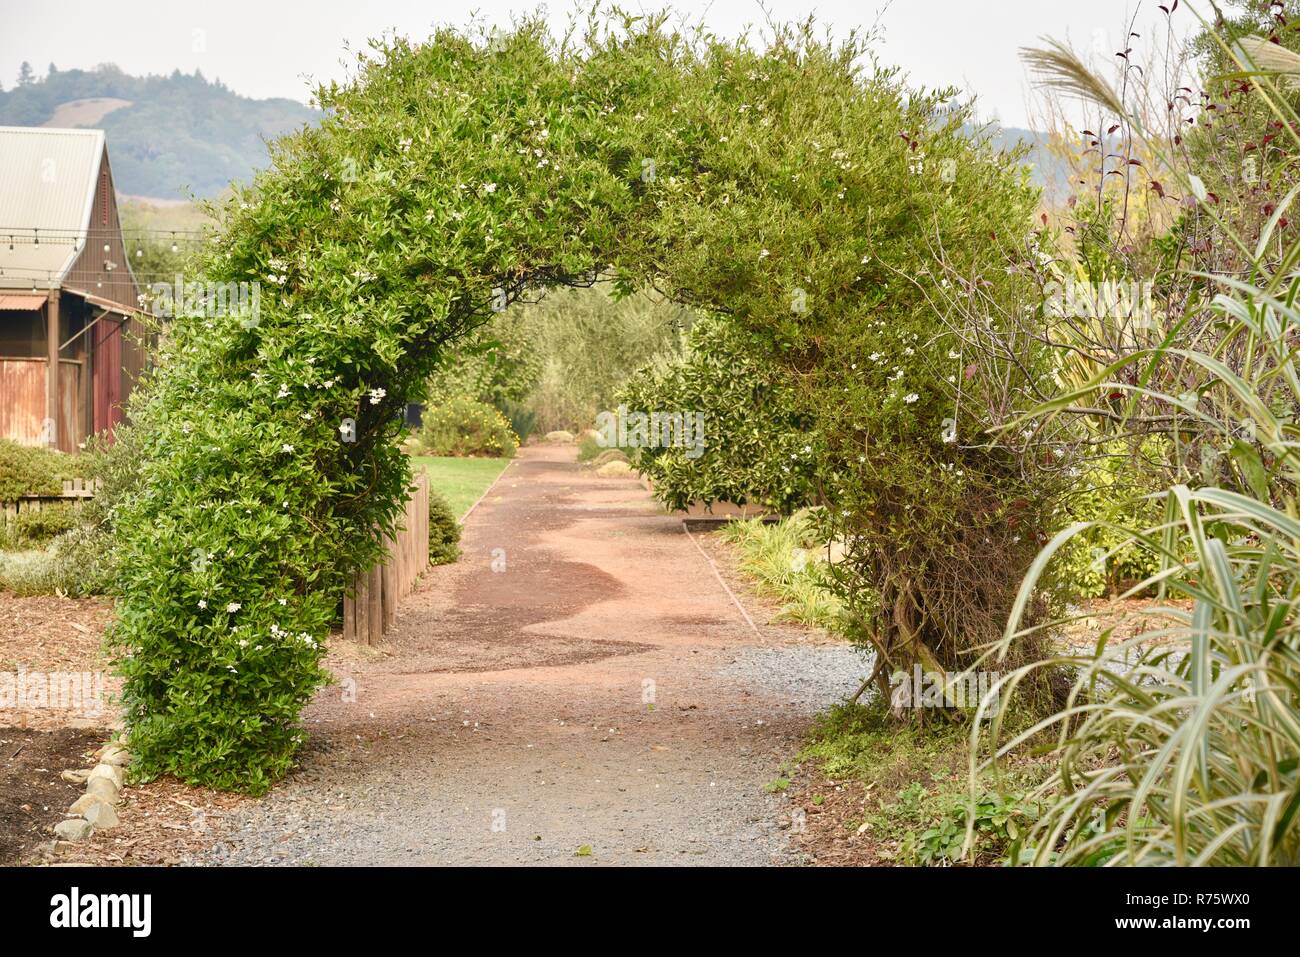 Lush, green leafy vine garden archway on path at Tasting Room of biodynamic Truett Hurst Winery, Sonoma County, Healdsburg, California, USA Stock Photo